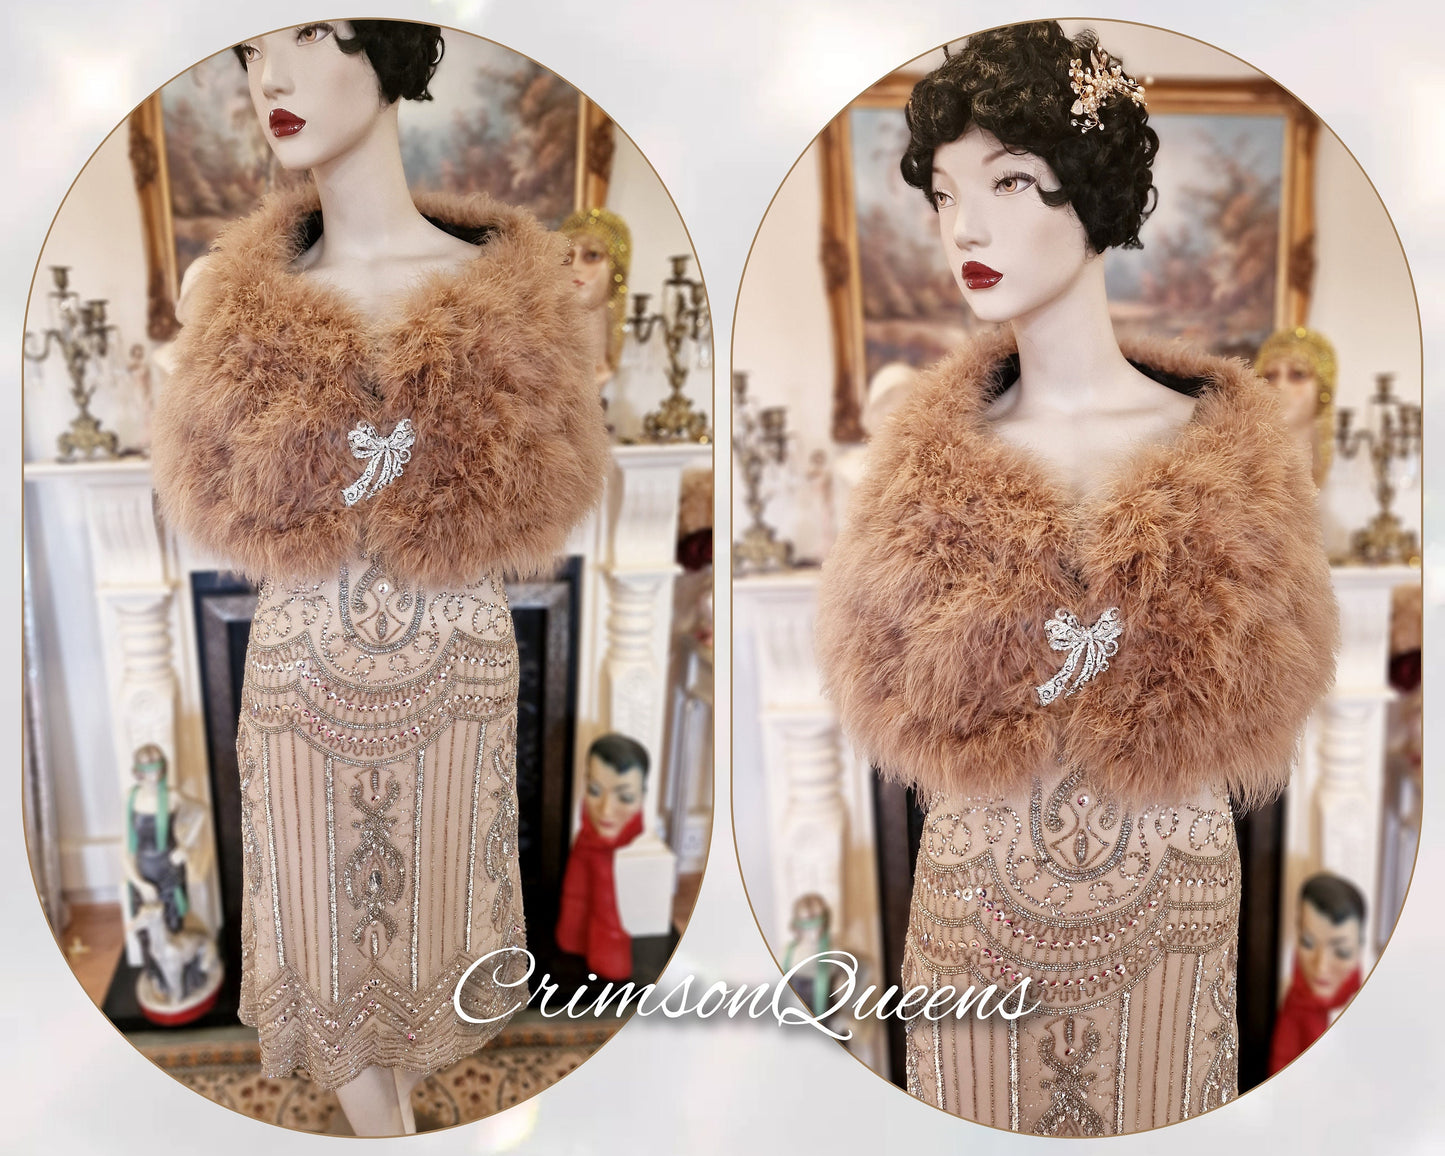 Vintage Great Gatsby pale gold beaded embellished shell flapper style dress 1920s beaded embellished dress UK 8 US 4